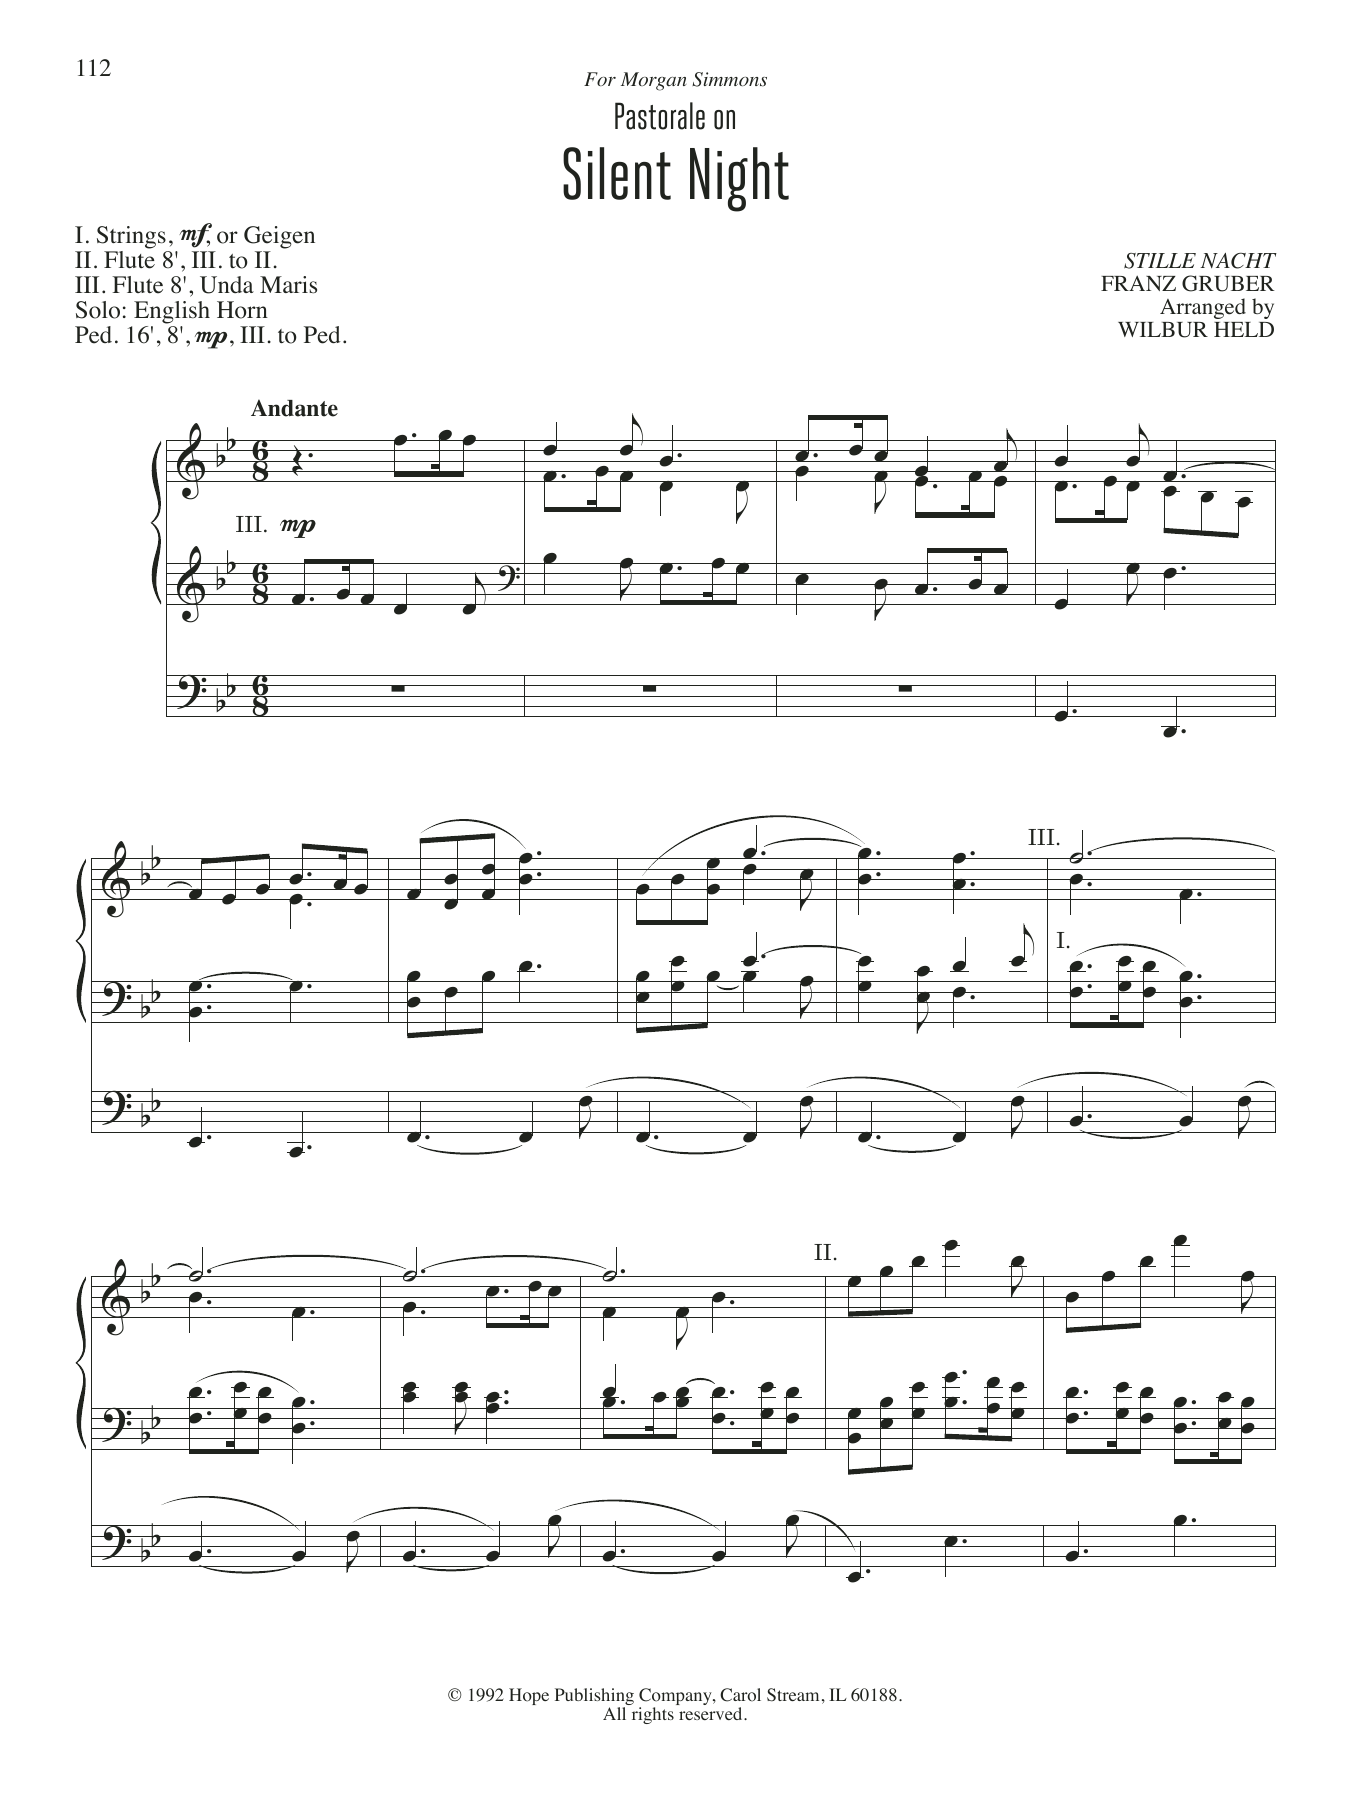 Wilbur Held Pastorale On Silent Night Sheet Music Notes & Chords for Organ - Download or Print PDF